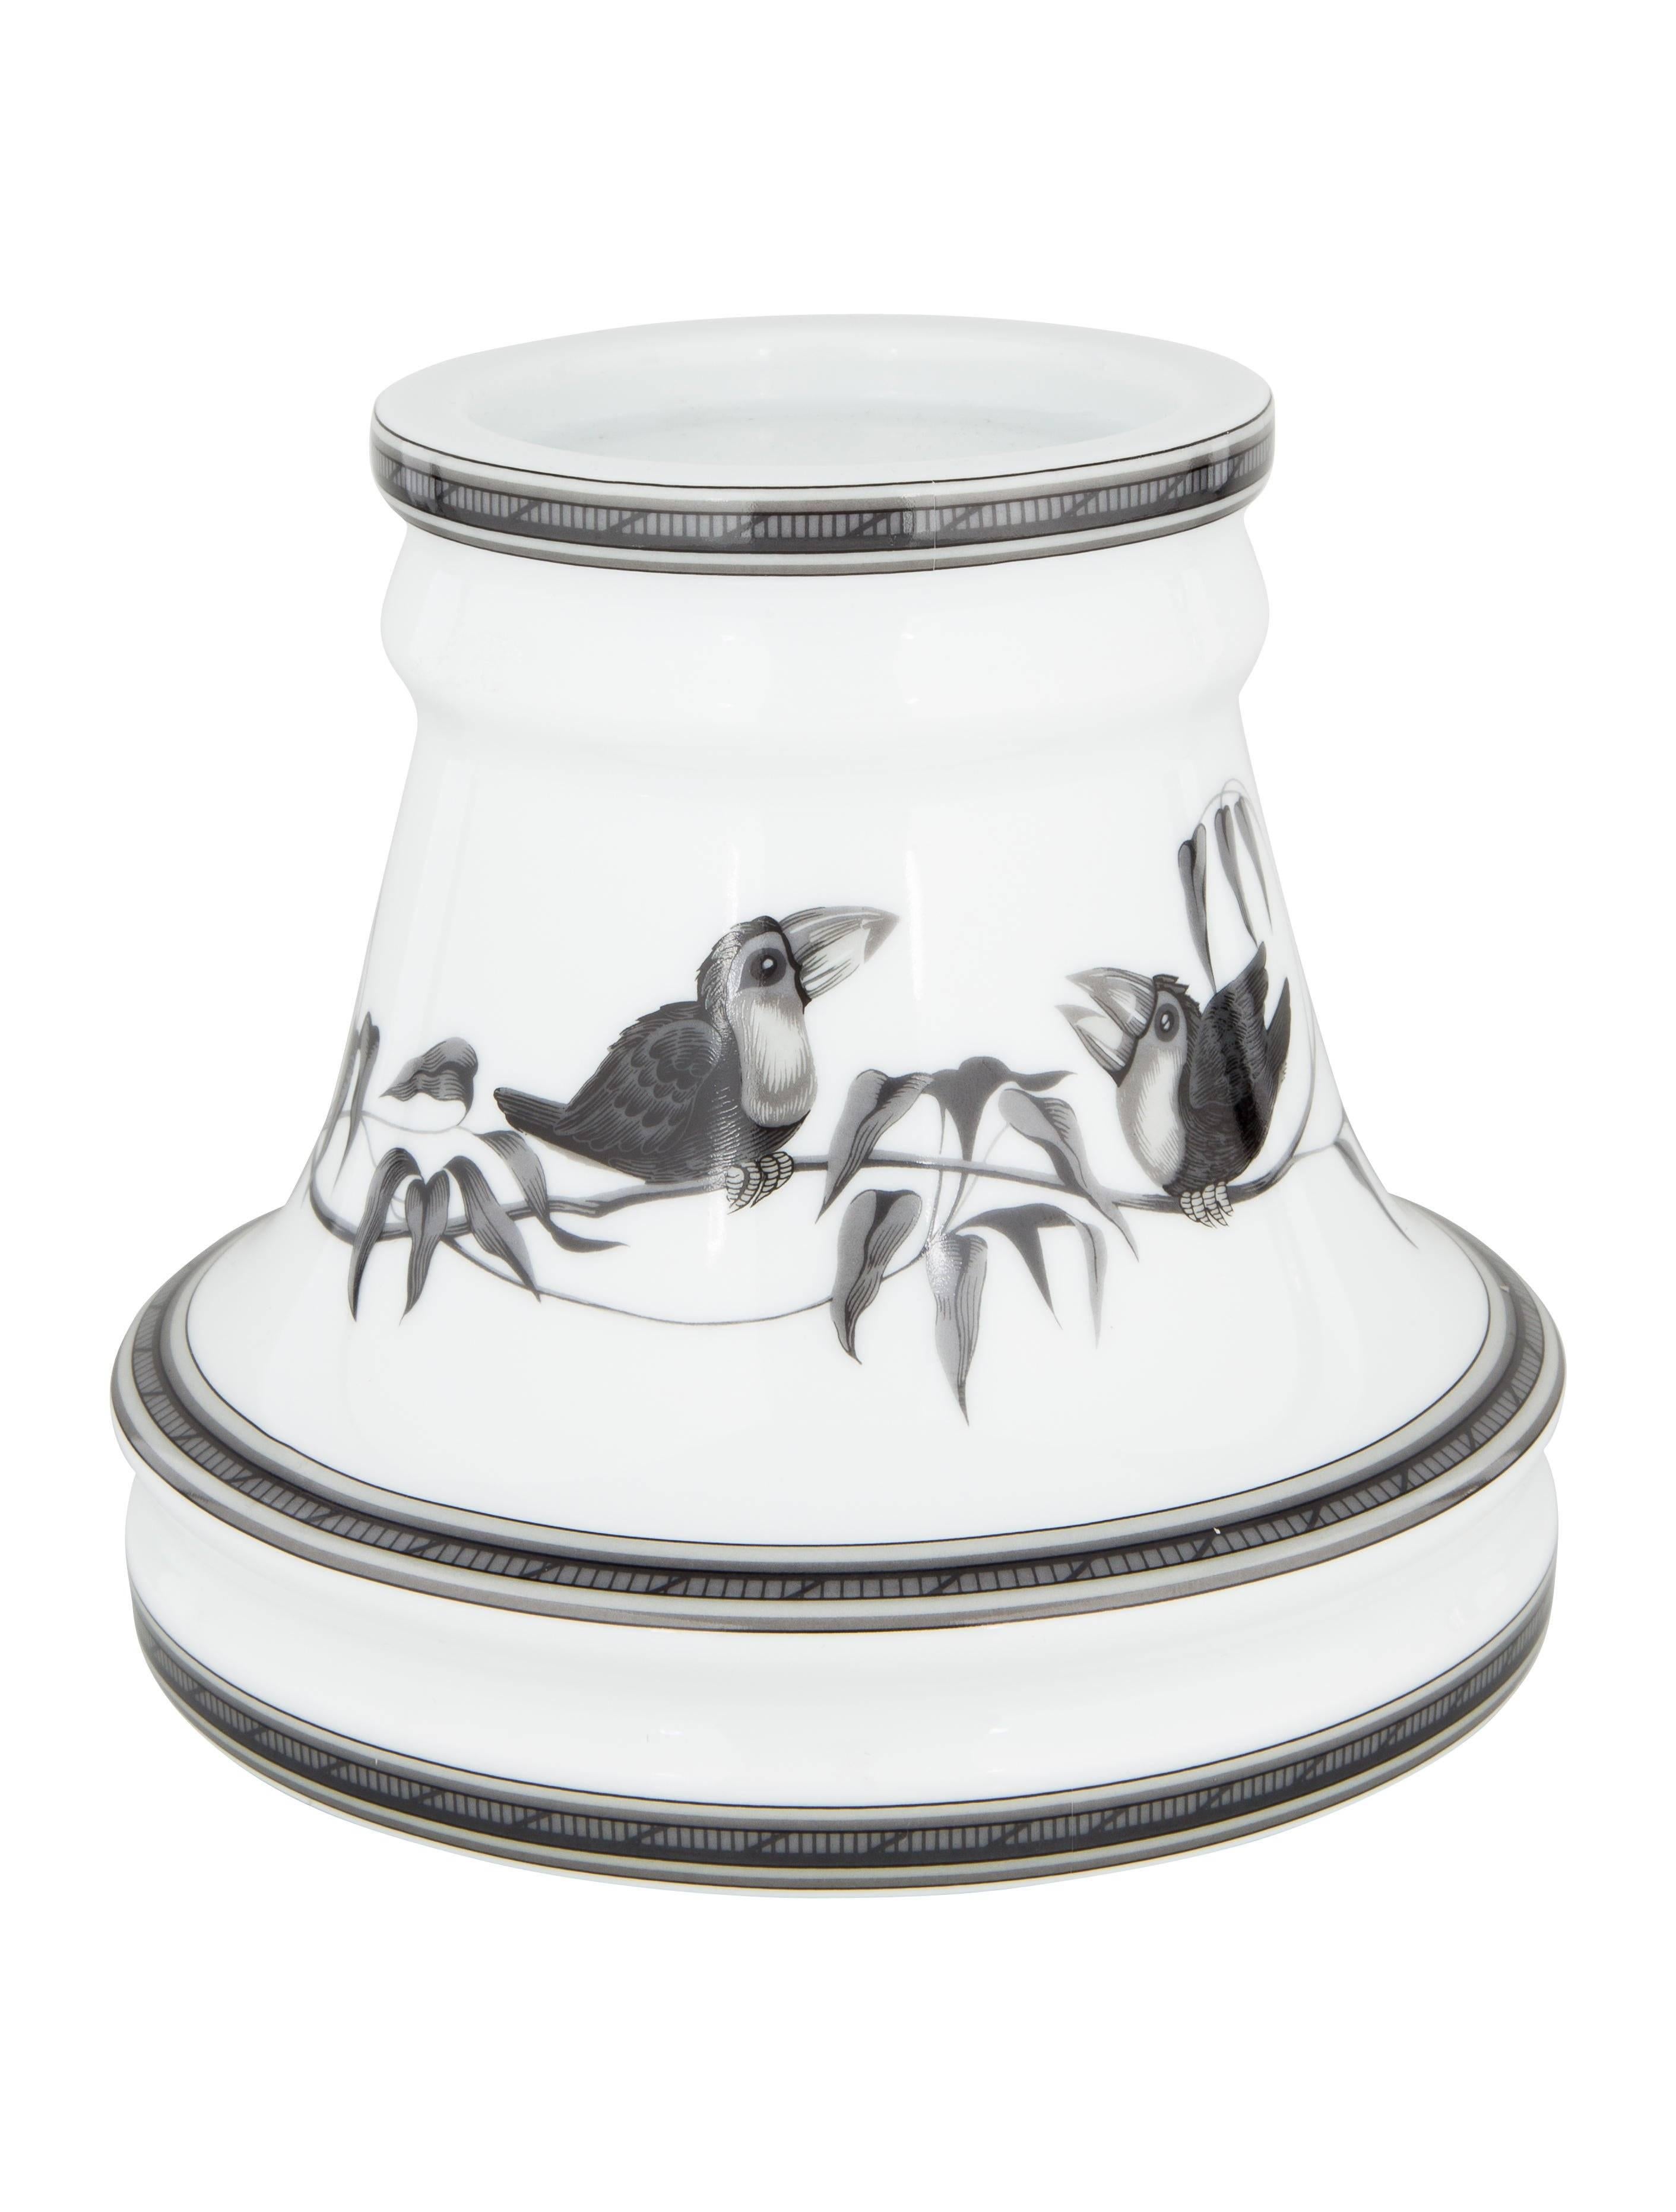 CURATOR'S NOTES

Hermes Porcelain White Black Bird Set of Two 2 Home Table Desk Decorative Candle Holders  

Porcelain
Signed
Measures 5.5